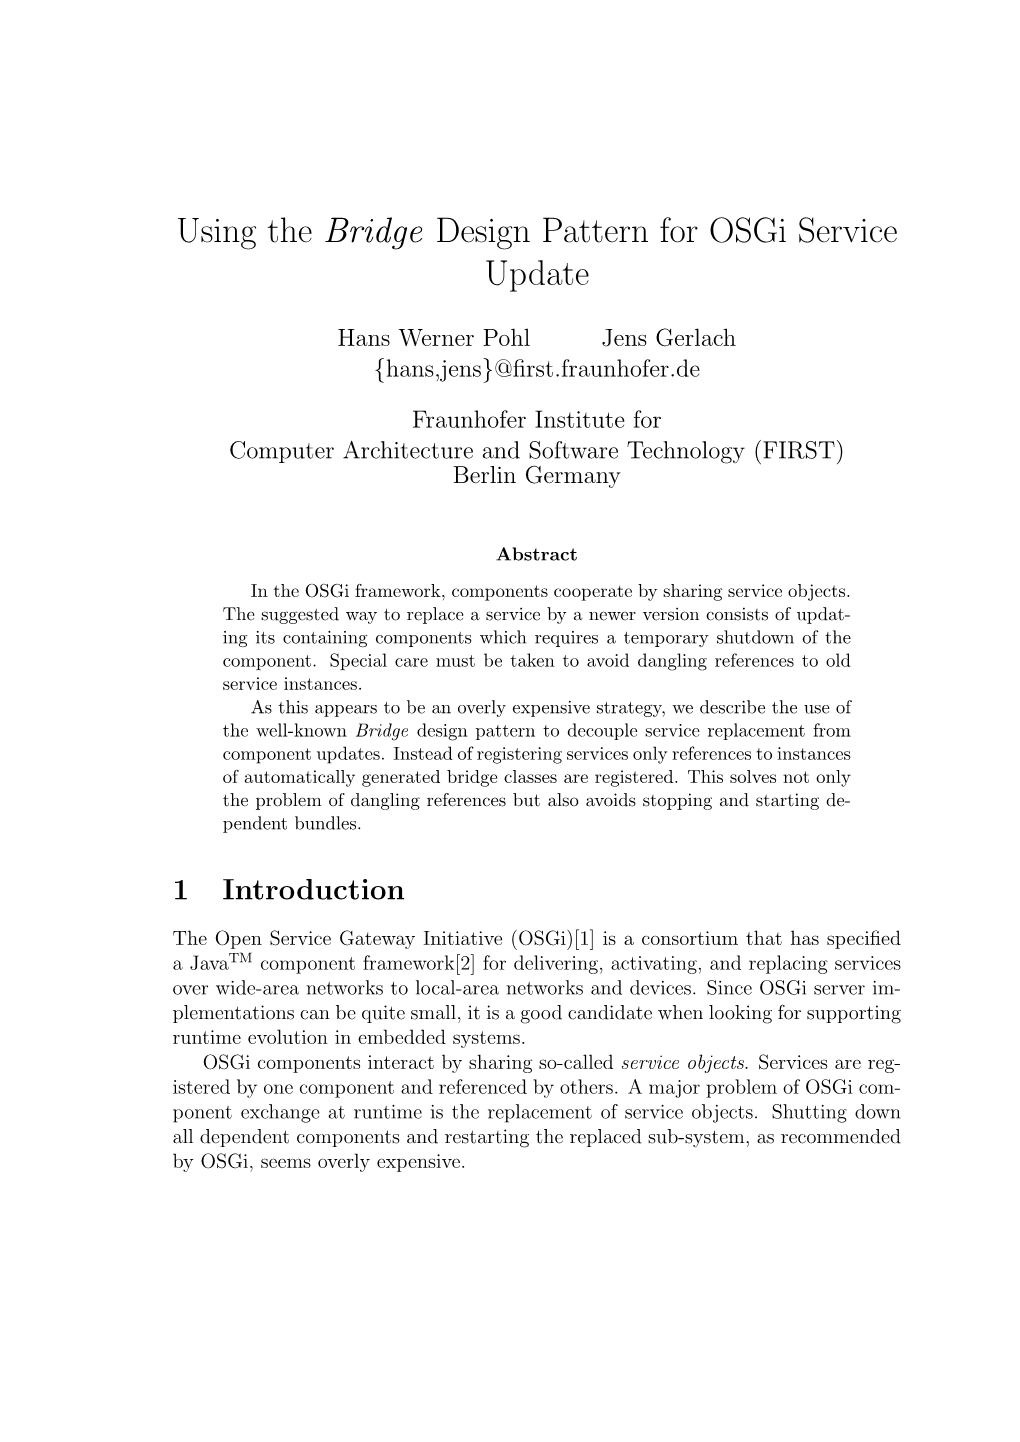 Using the Bridge Design Pattern for Osgi Service Update